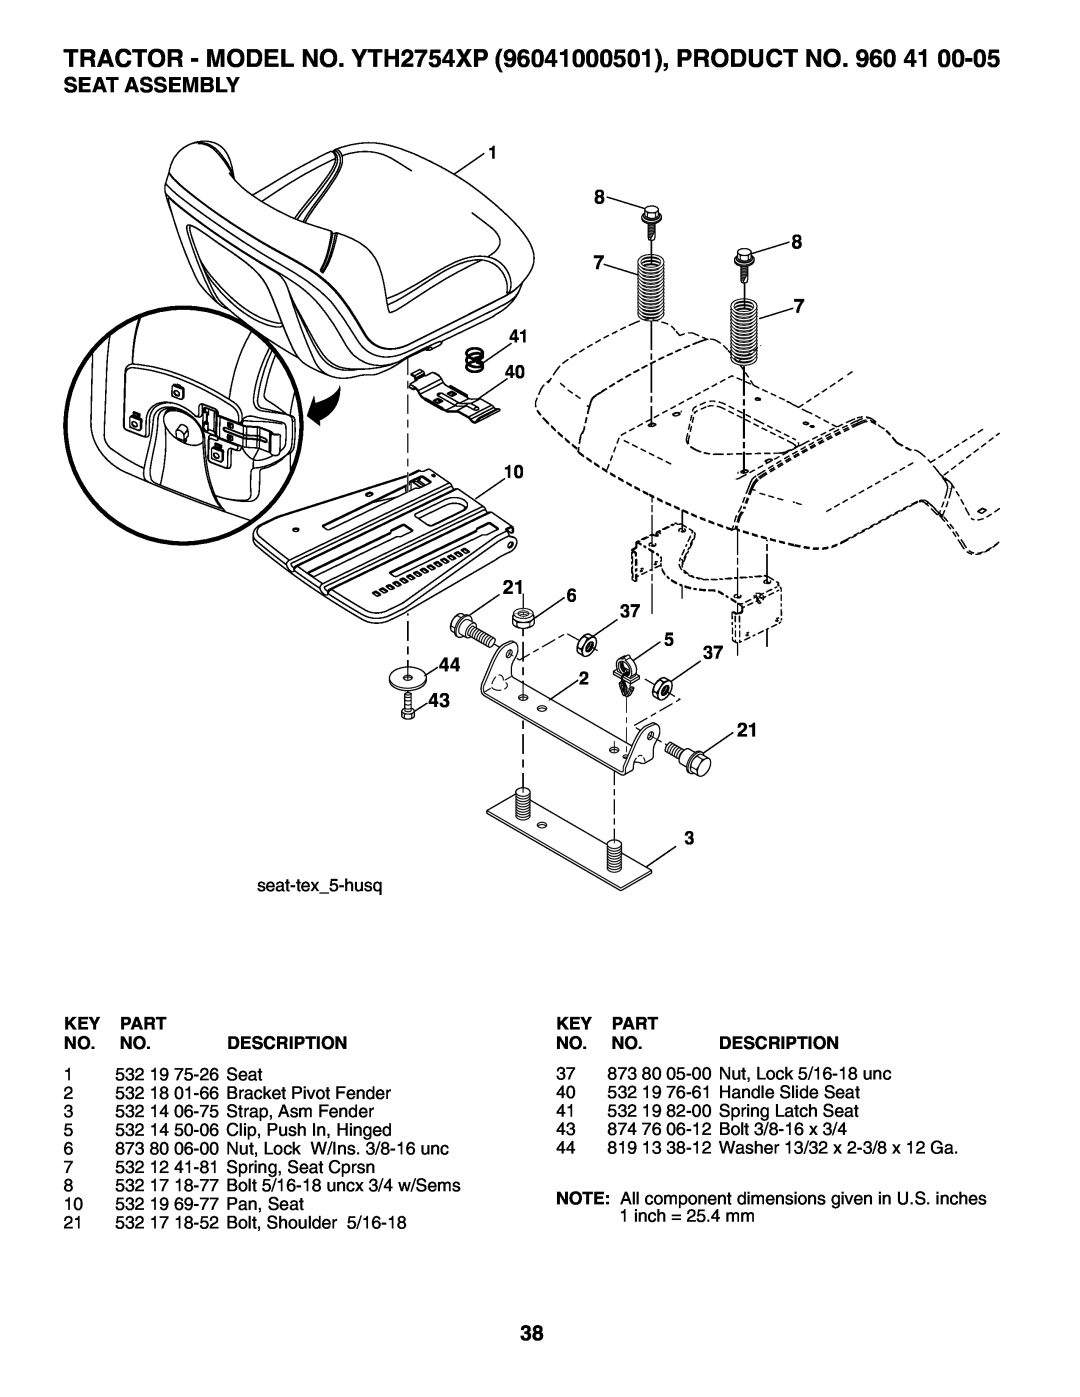 Husqvarna YTH2754XP owner manual Seat Assembly, 41 40 10 216 37, Key Part No. No. Description 